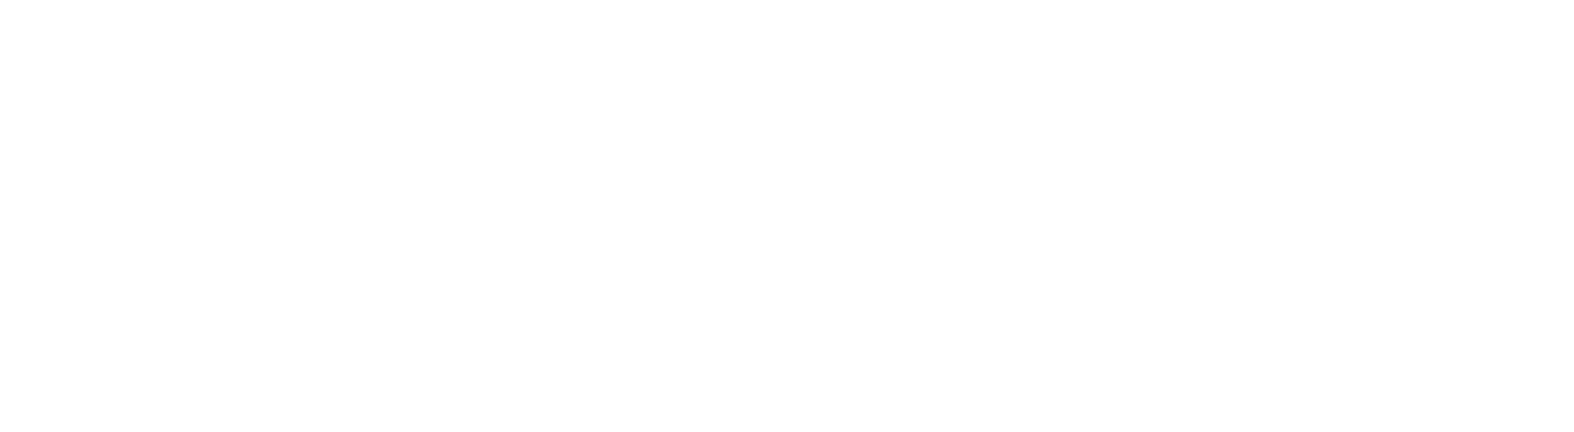 Li Ning Company logo for dark backgrounds (transparent PNG)